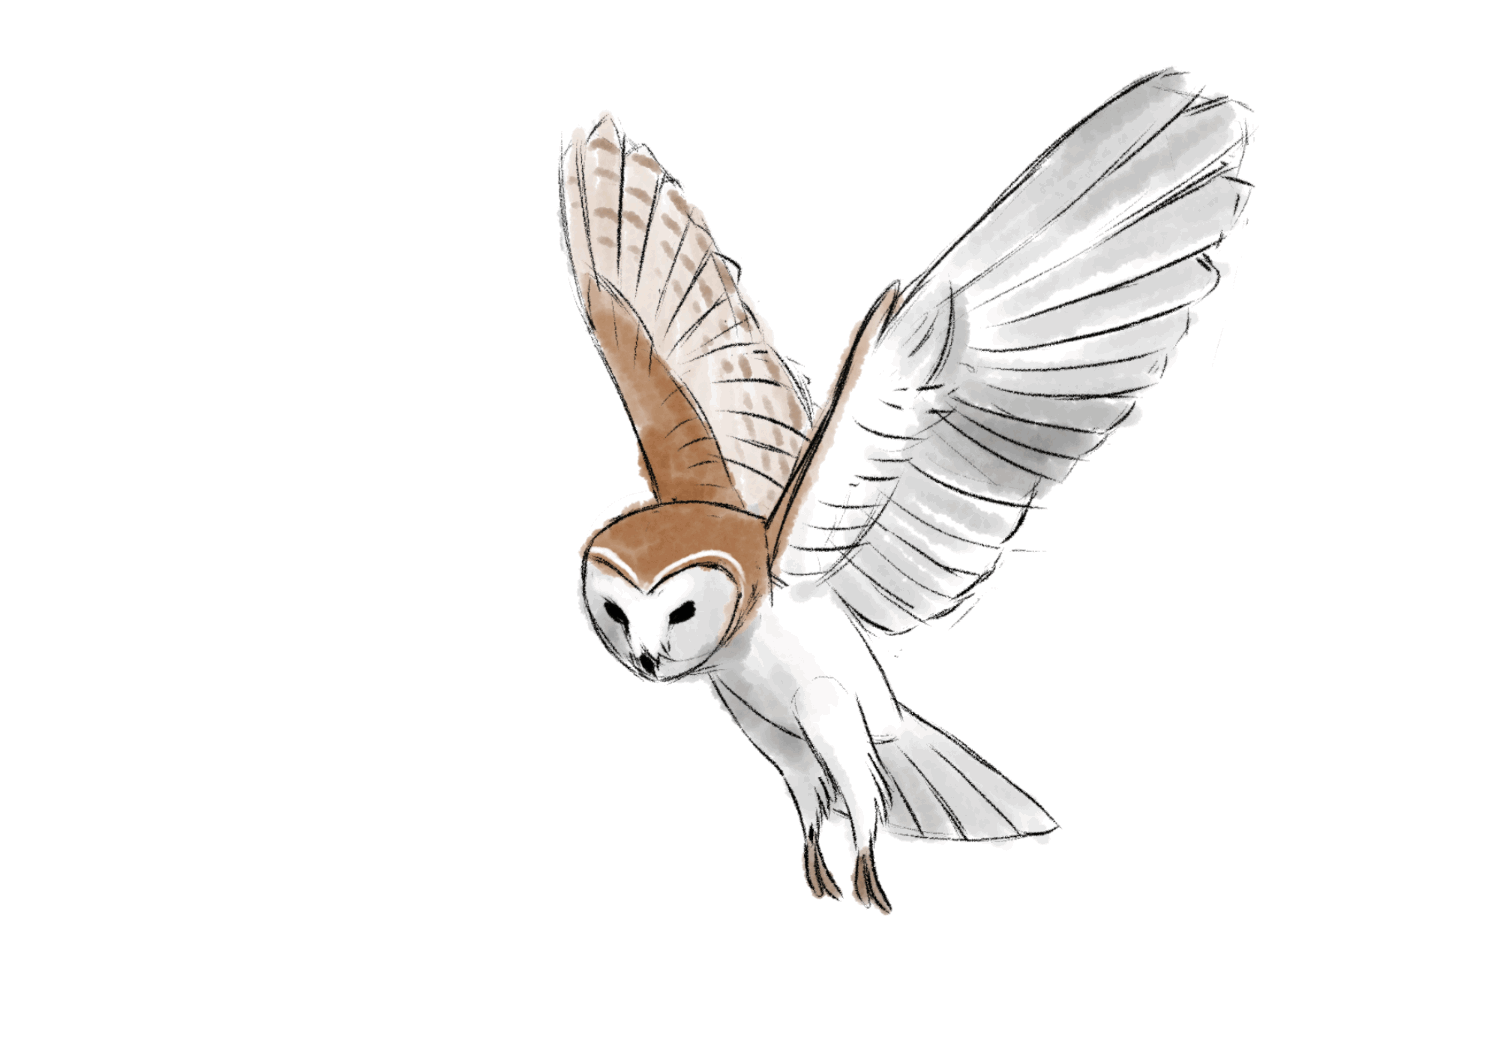 Owl flight cycle animation by tanya-buka on DeviantArt